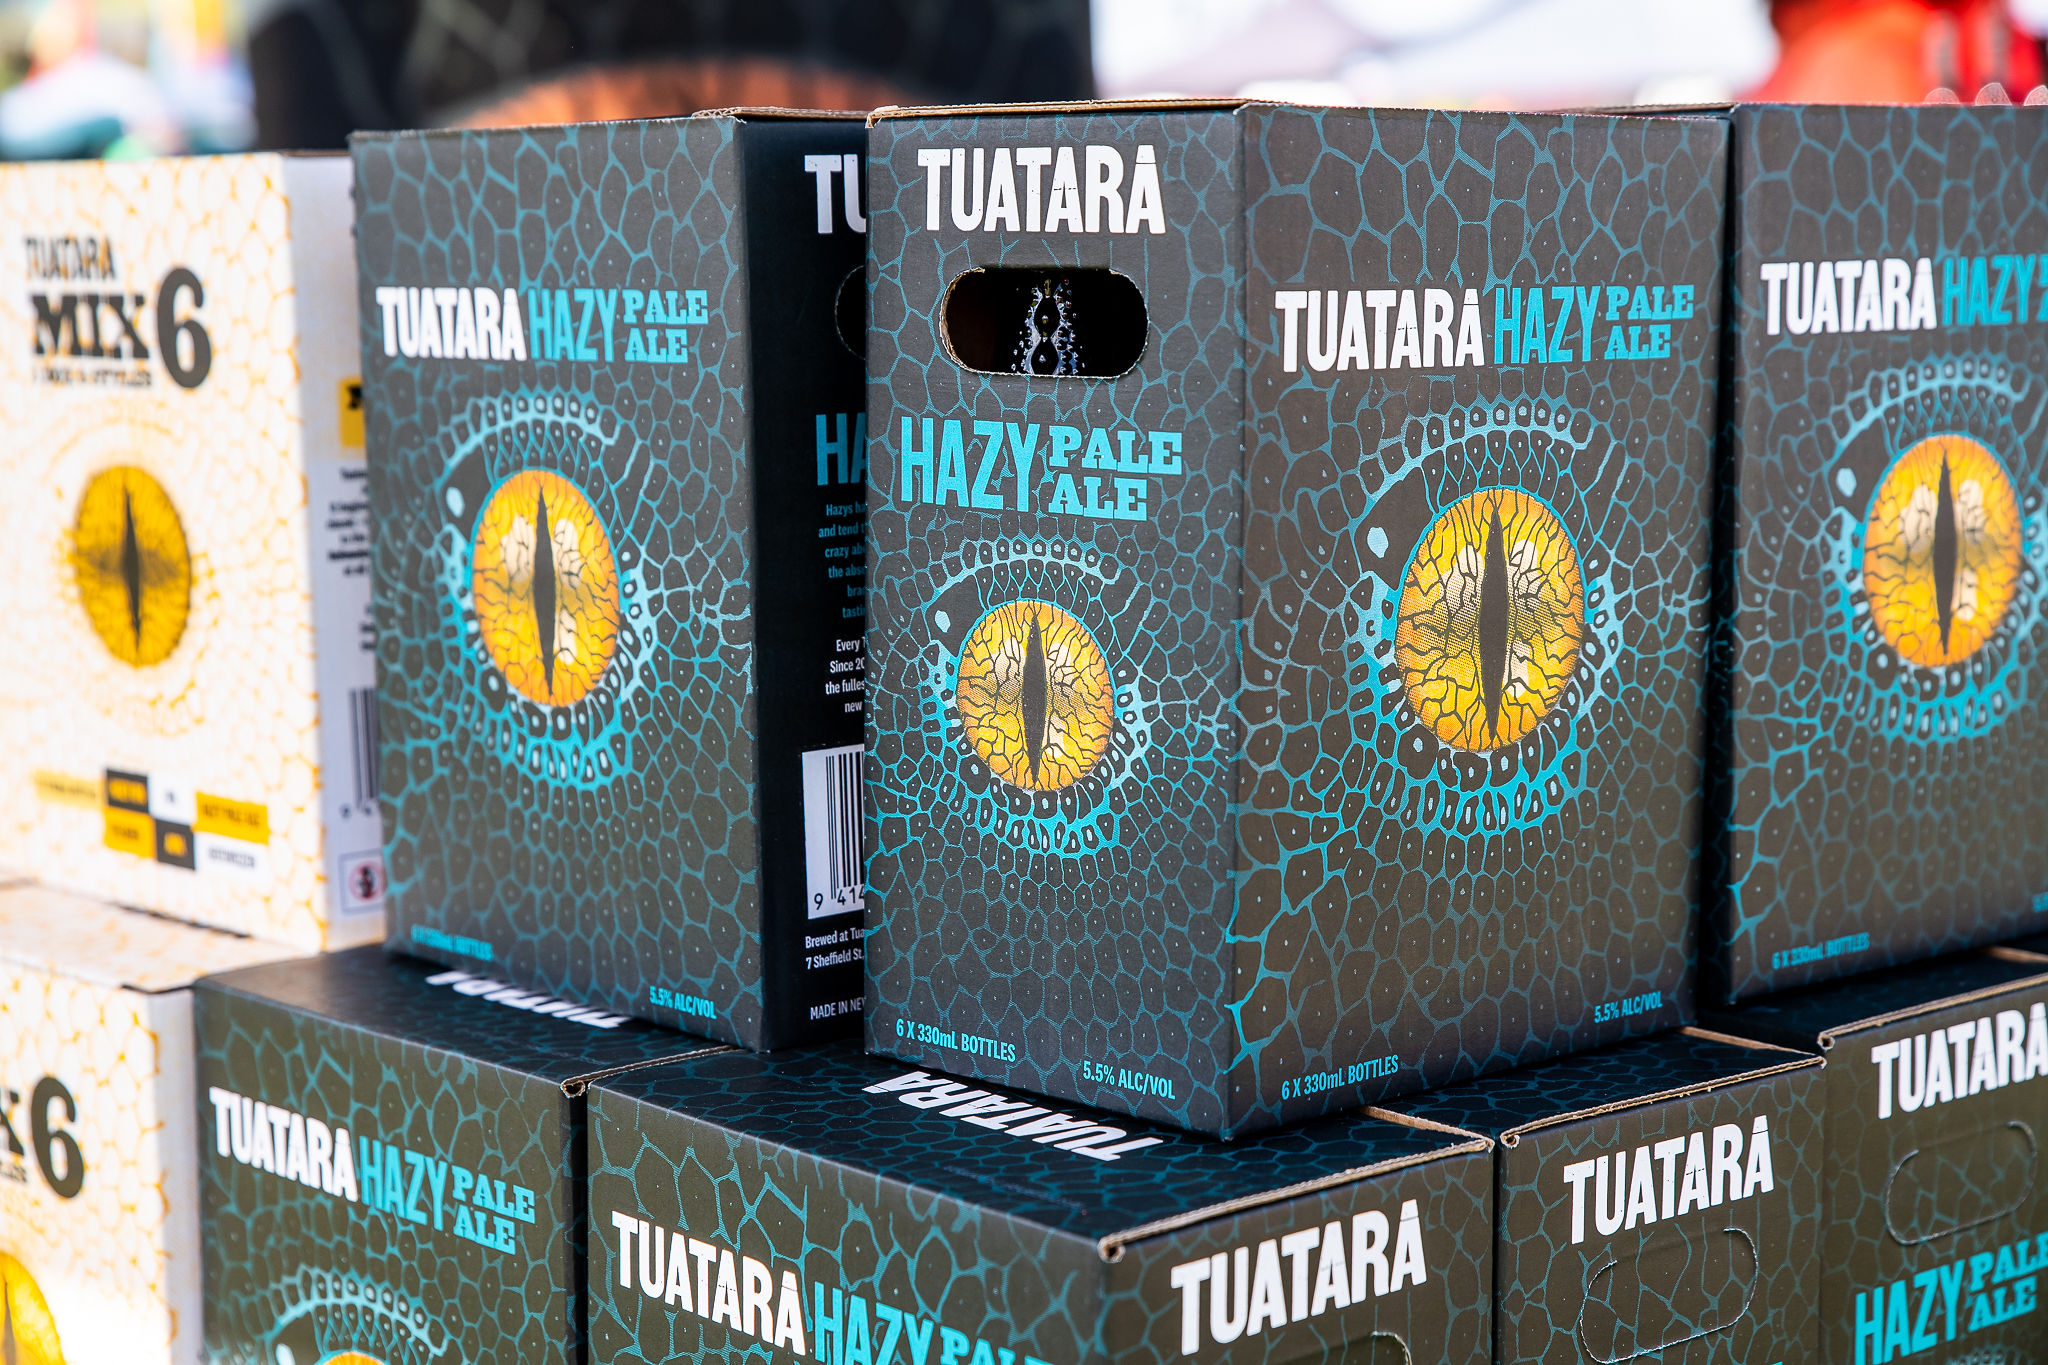 Tuatara Brewing